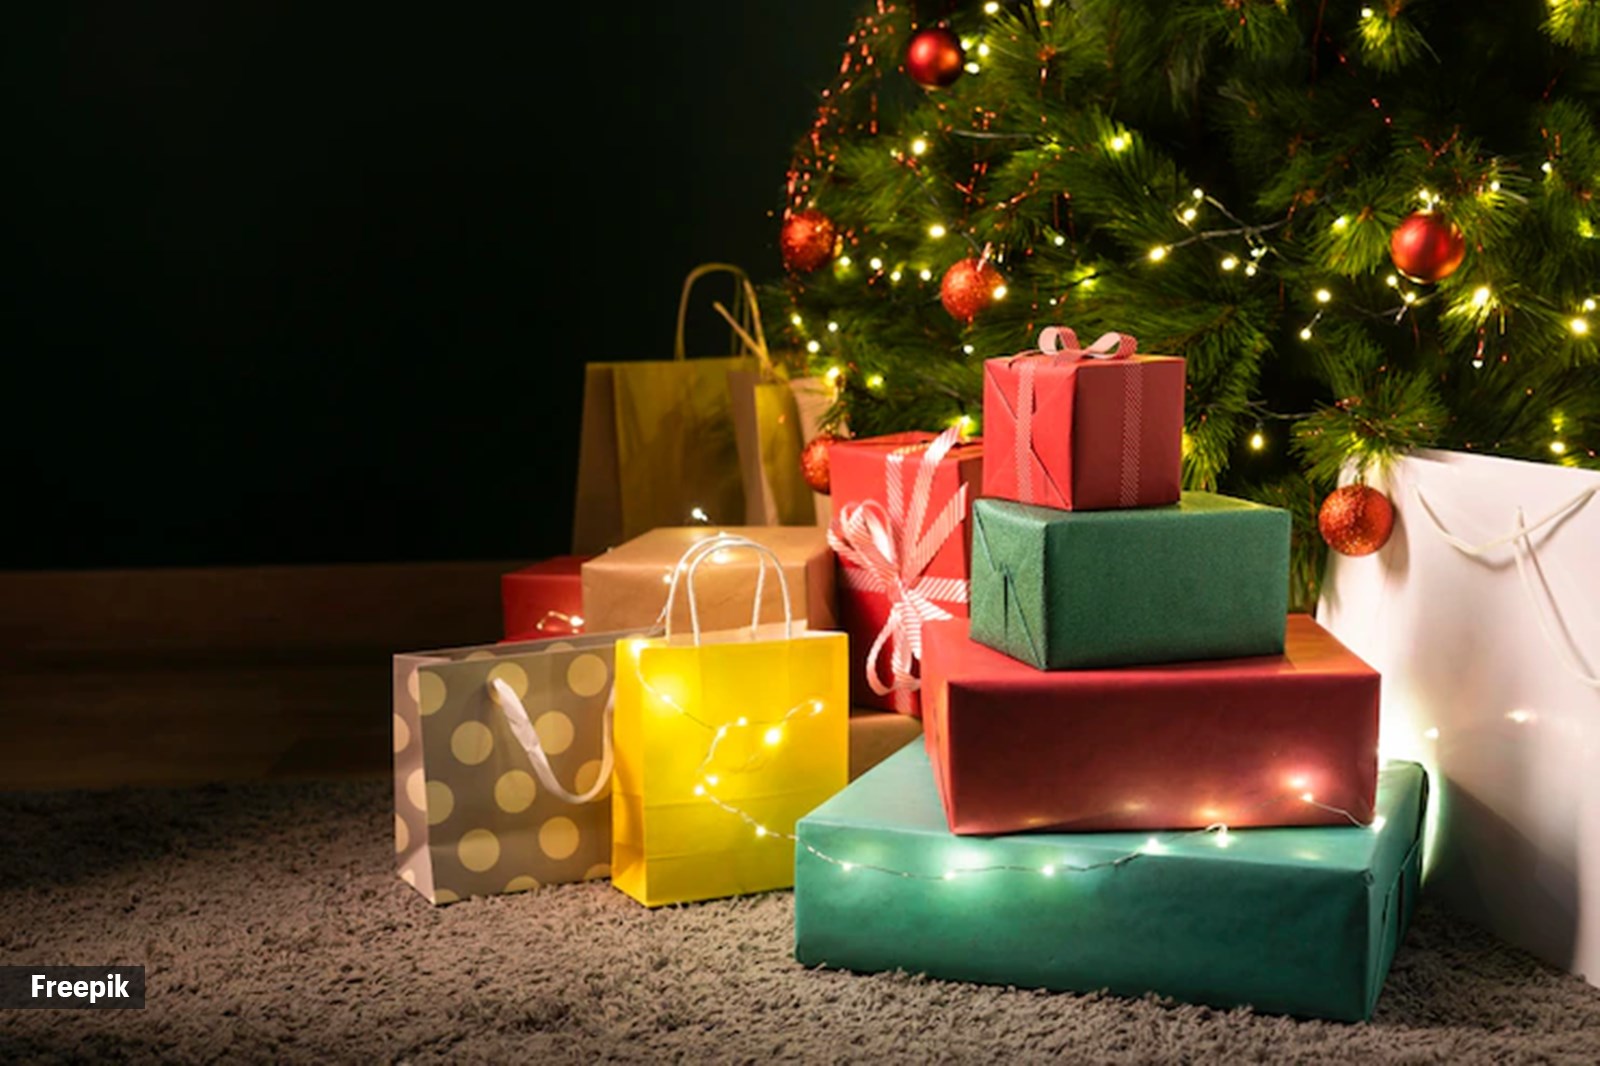 What are some creative Secret Santa presents? - Quora